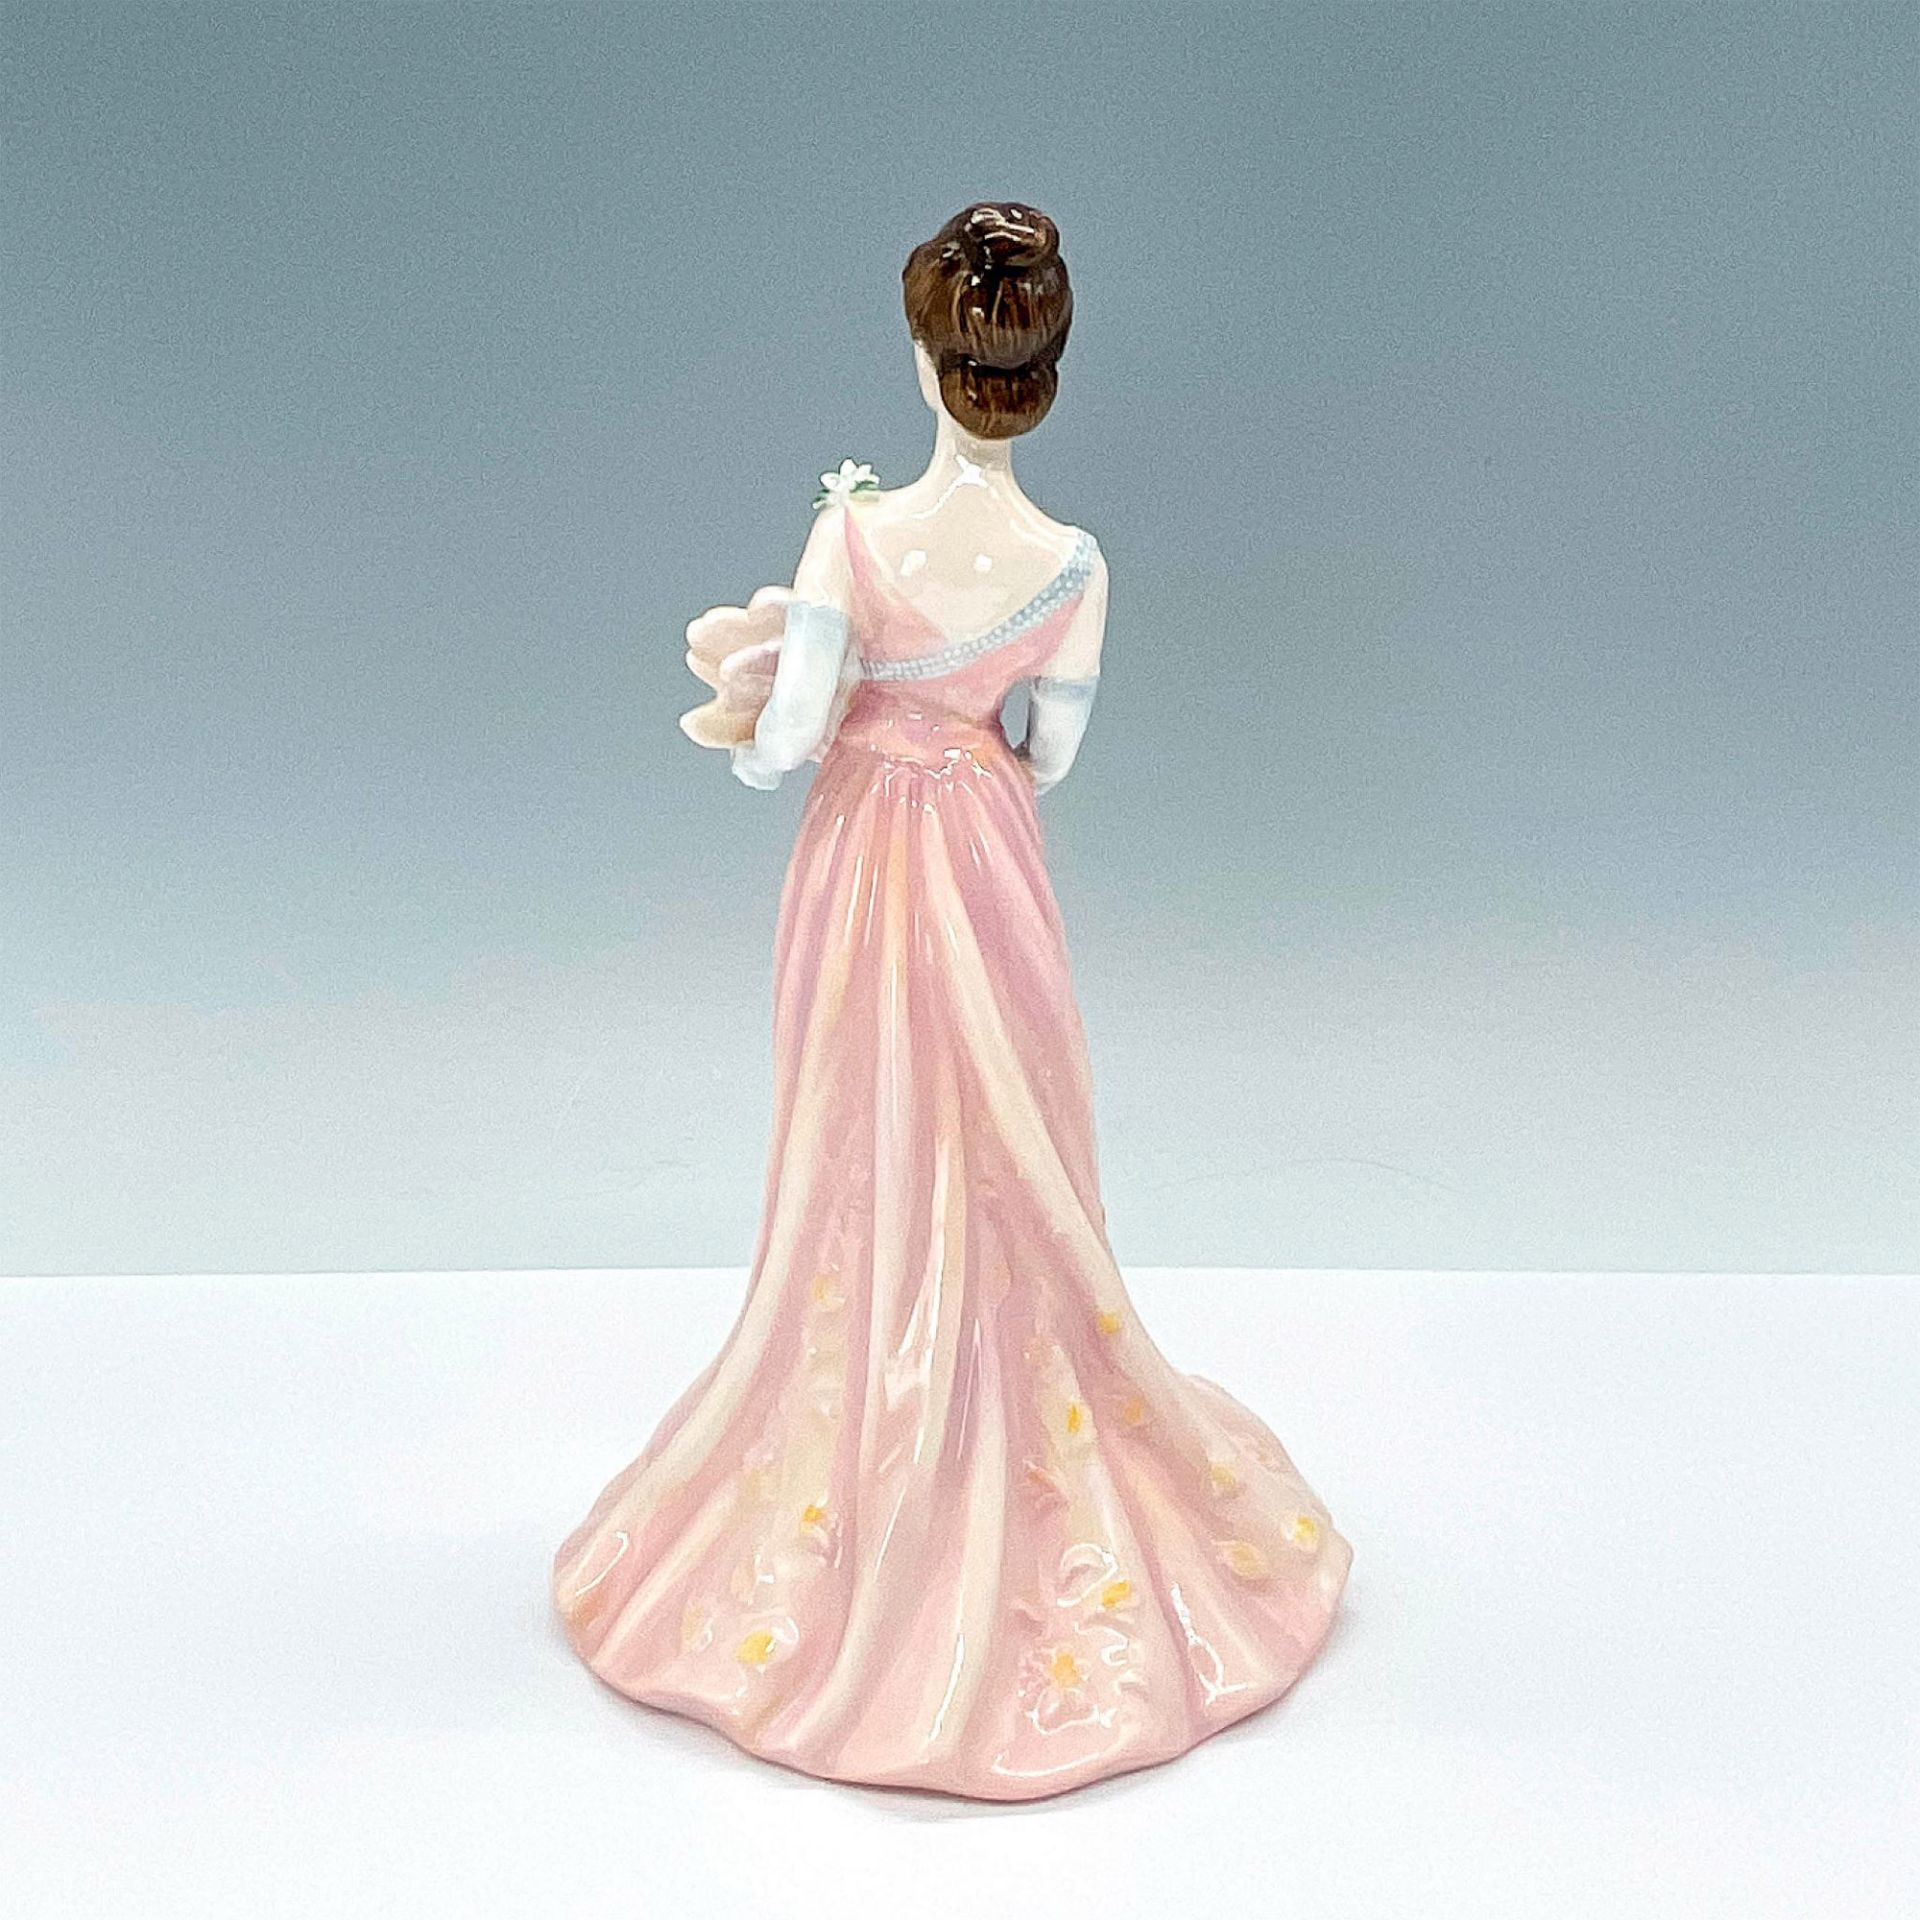 Lillie Langtry HN3820 - Royal Doulton Figurine - Image 2 of 3